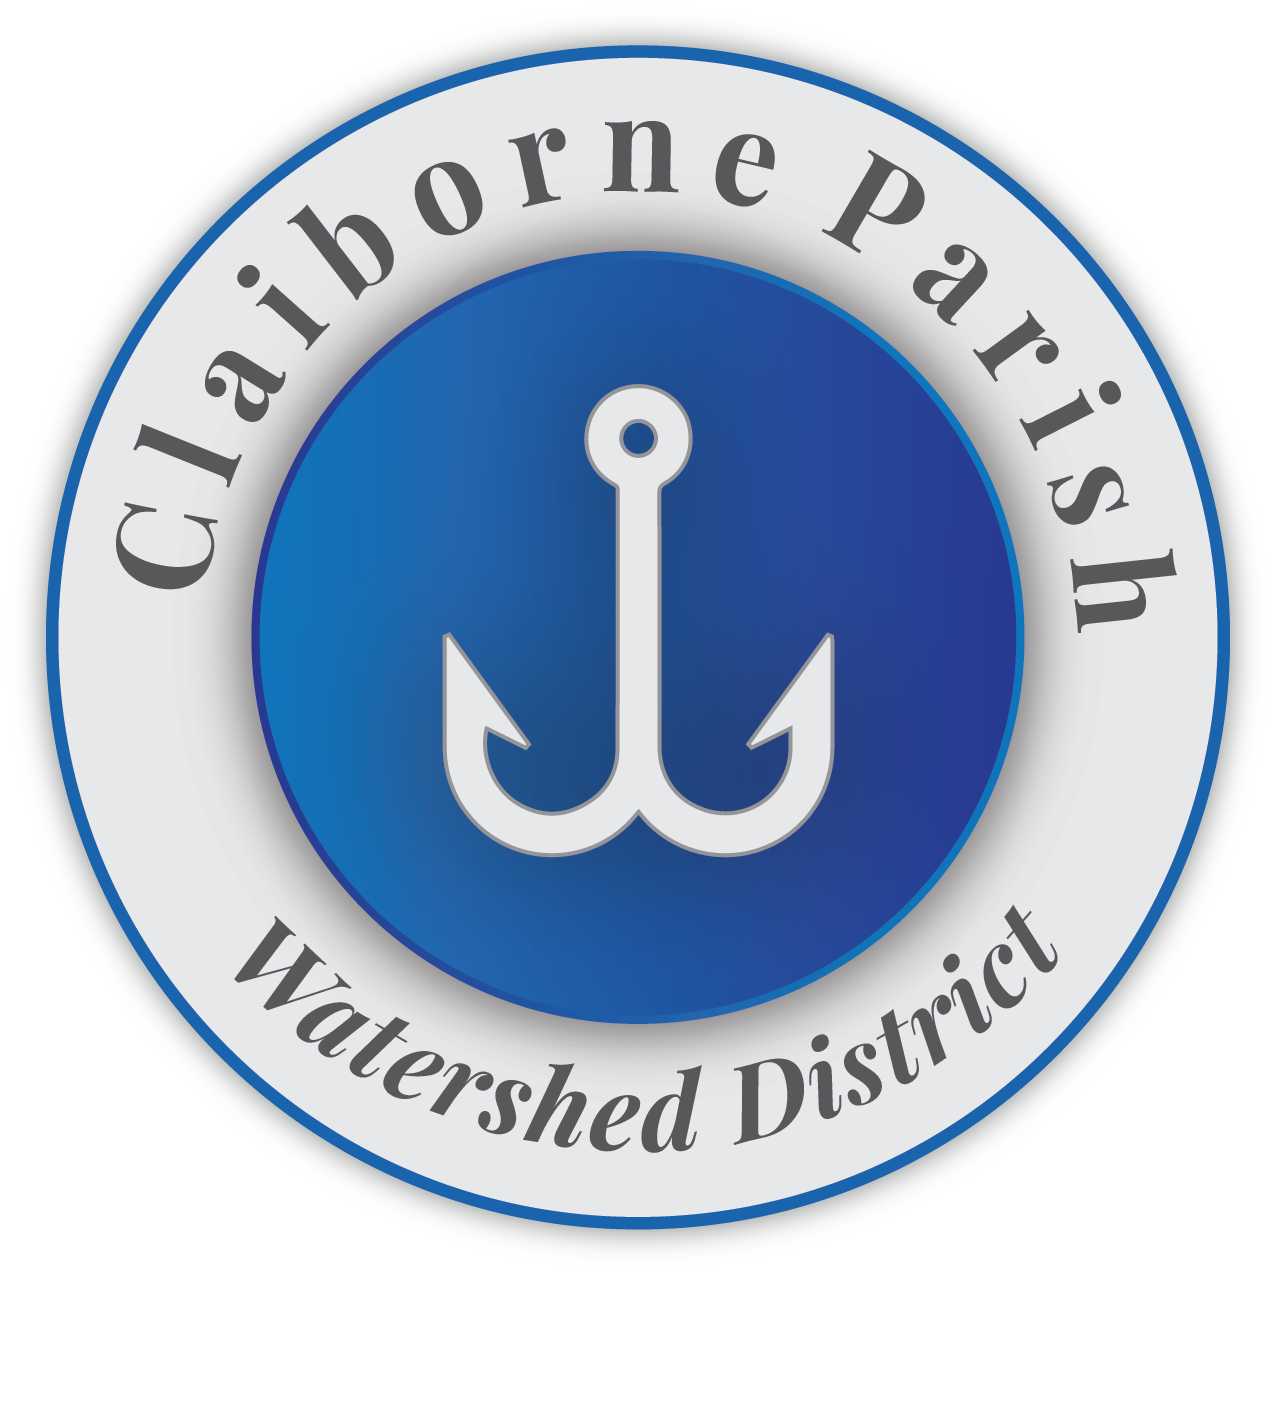 Claiborne Parish Watershed District